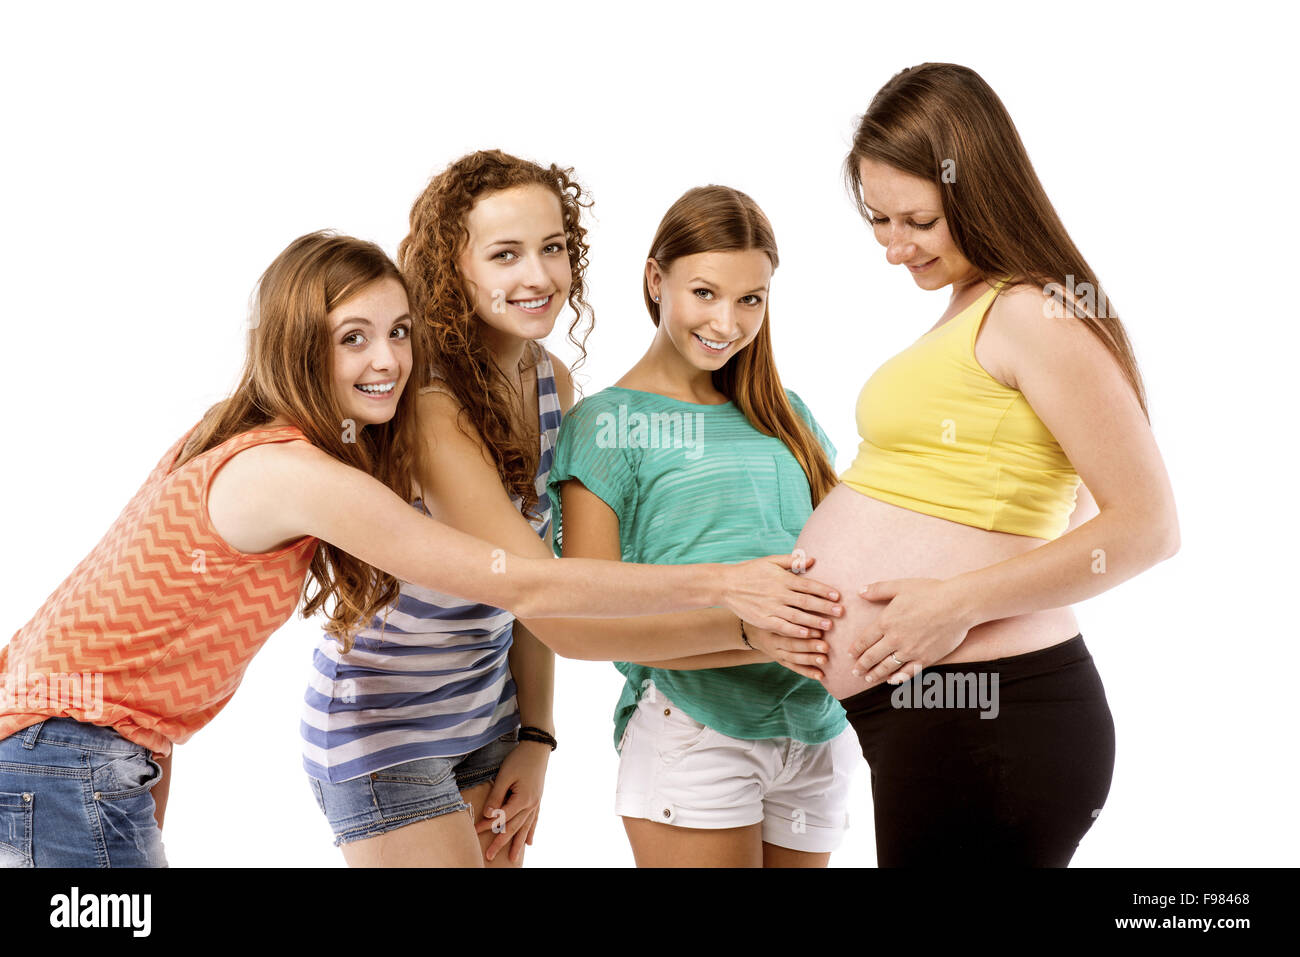 Friends Pregnant 46